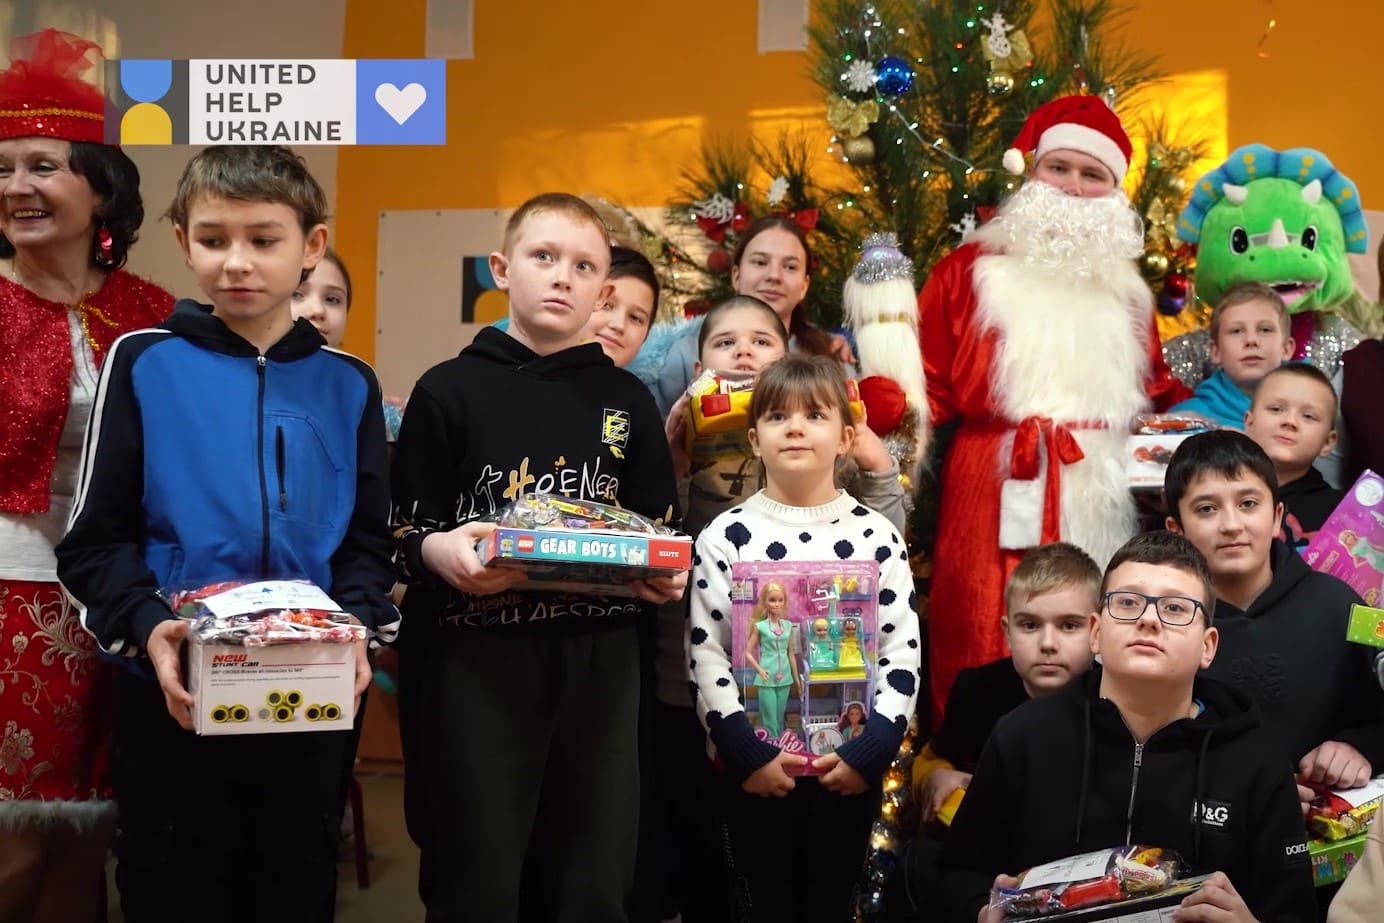 Bringing Christmas joy to children in Kharkiv